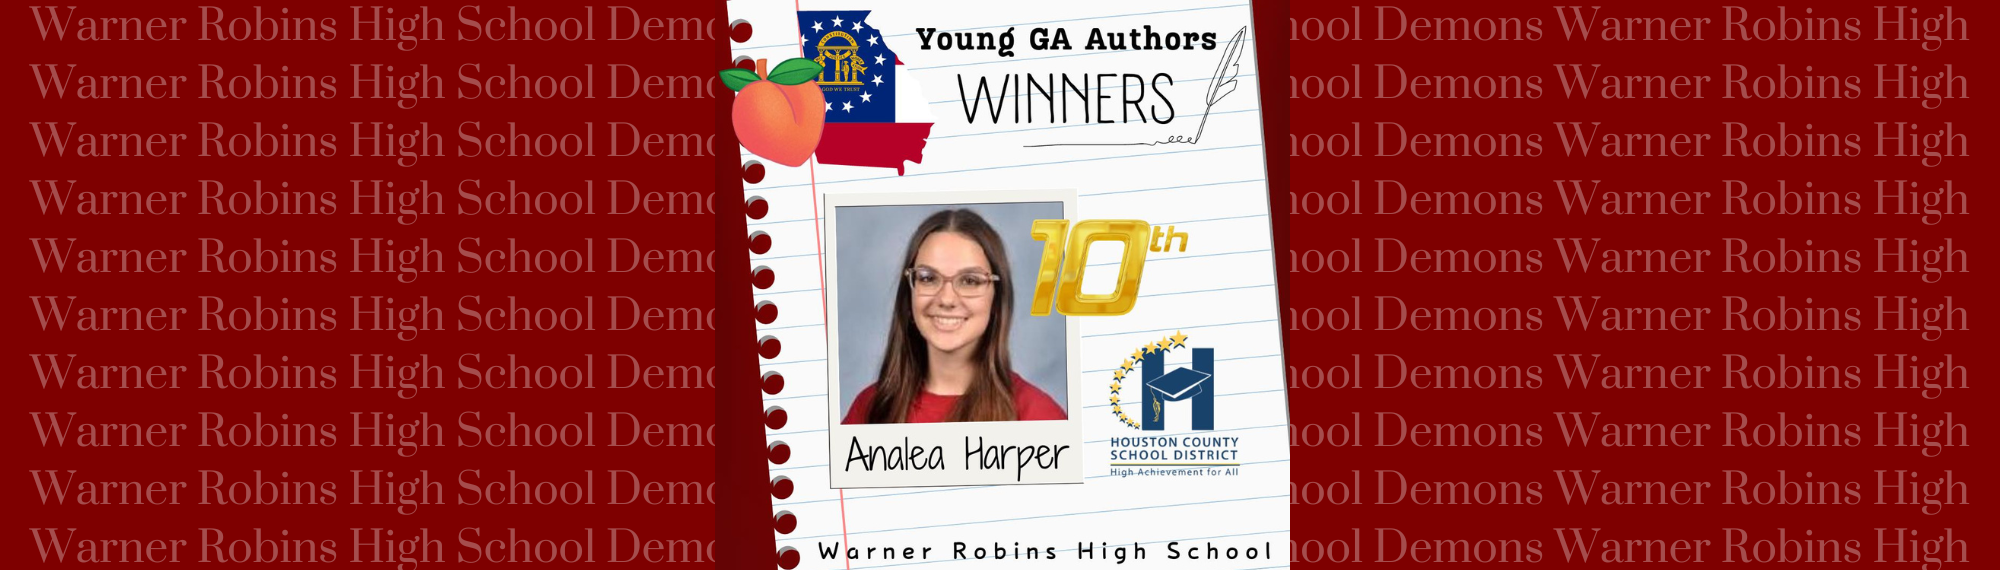 Young Georgia Authors Winner